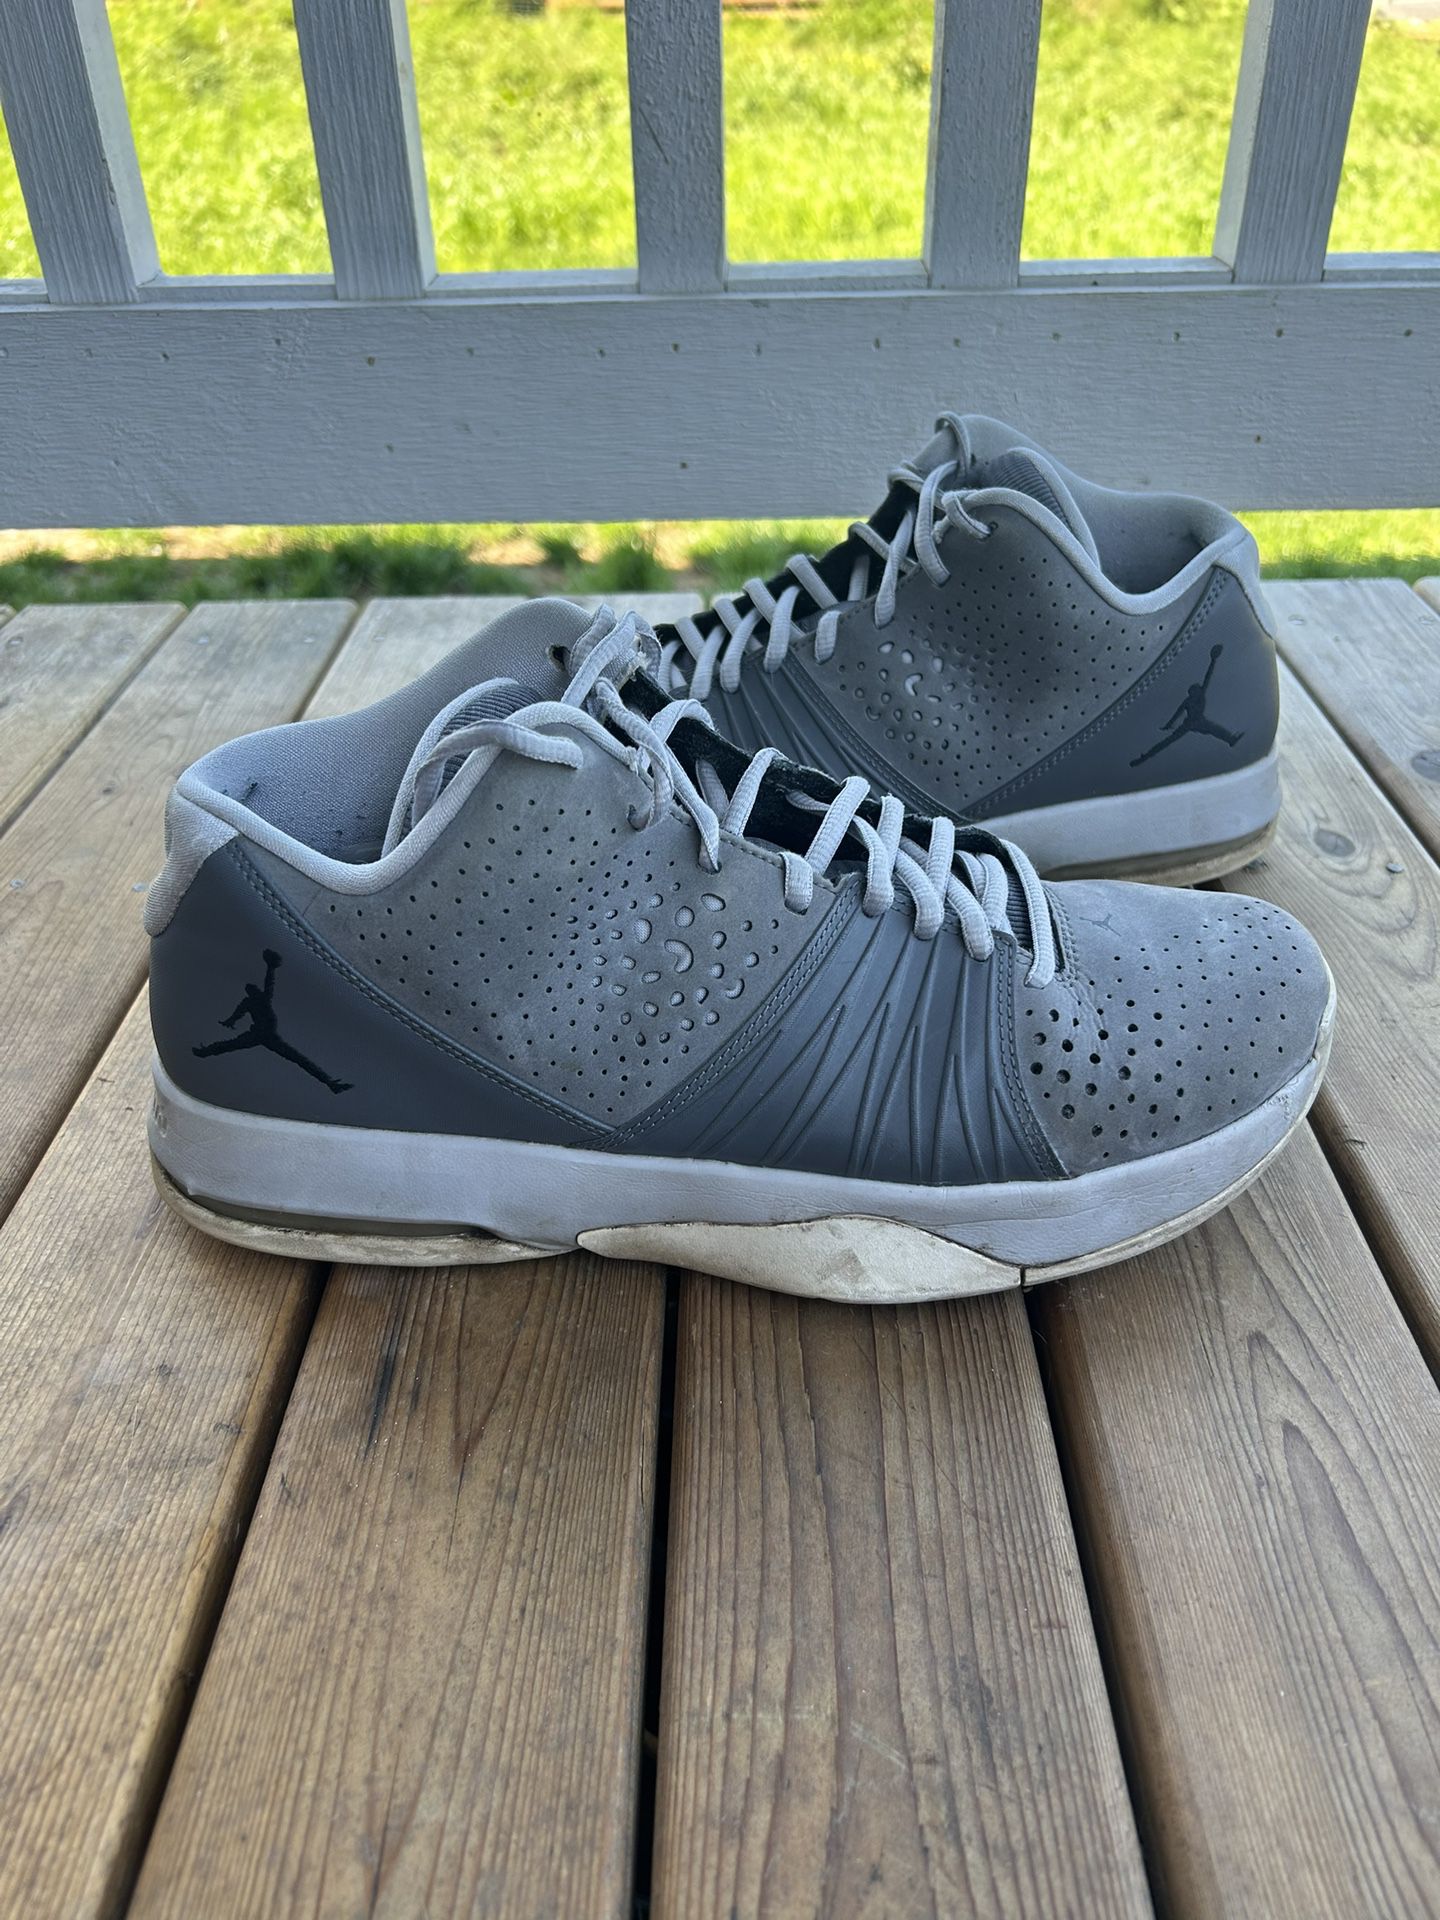 Jordan 5am Grey Size 12.5